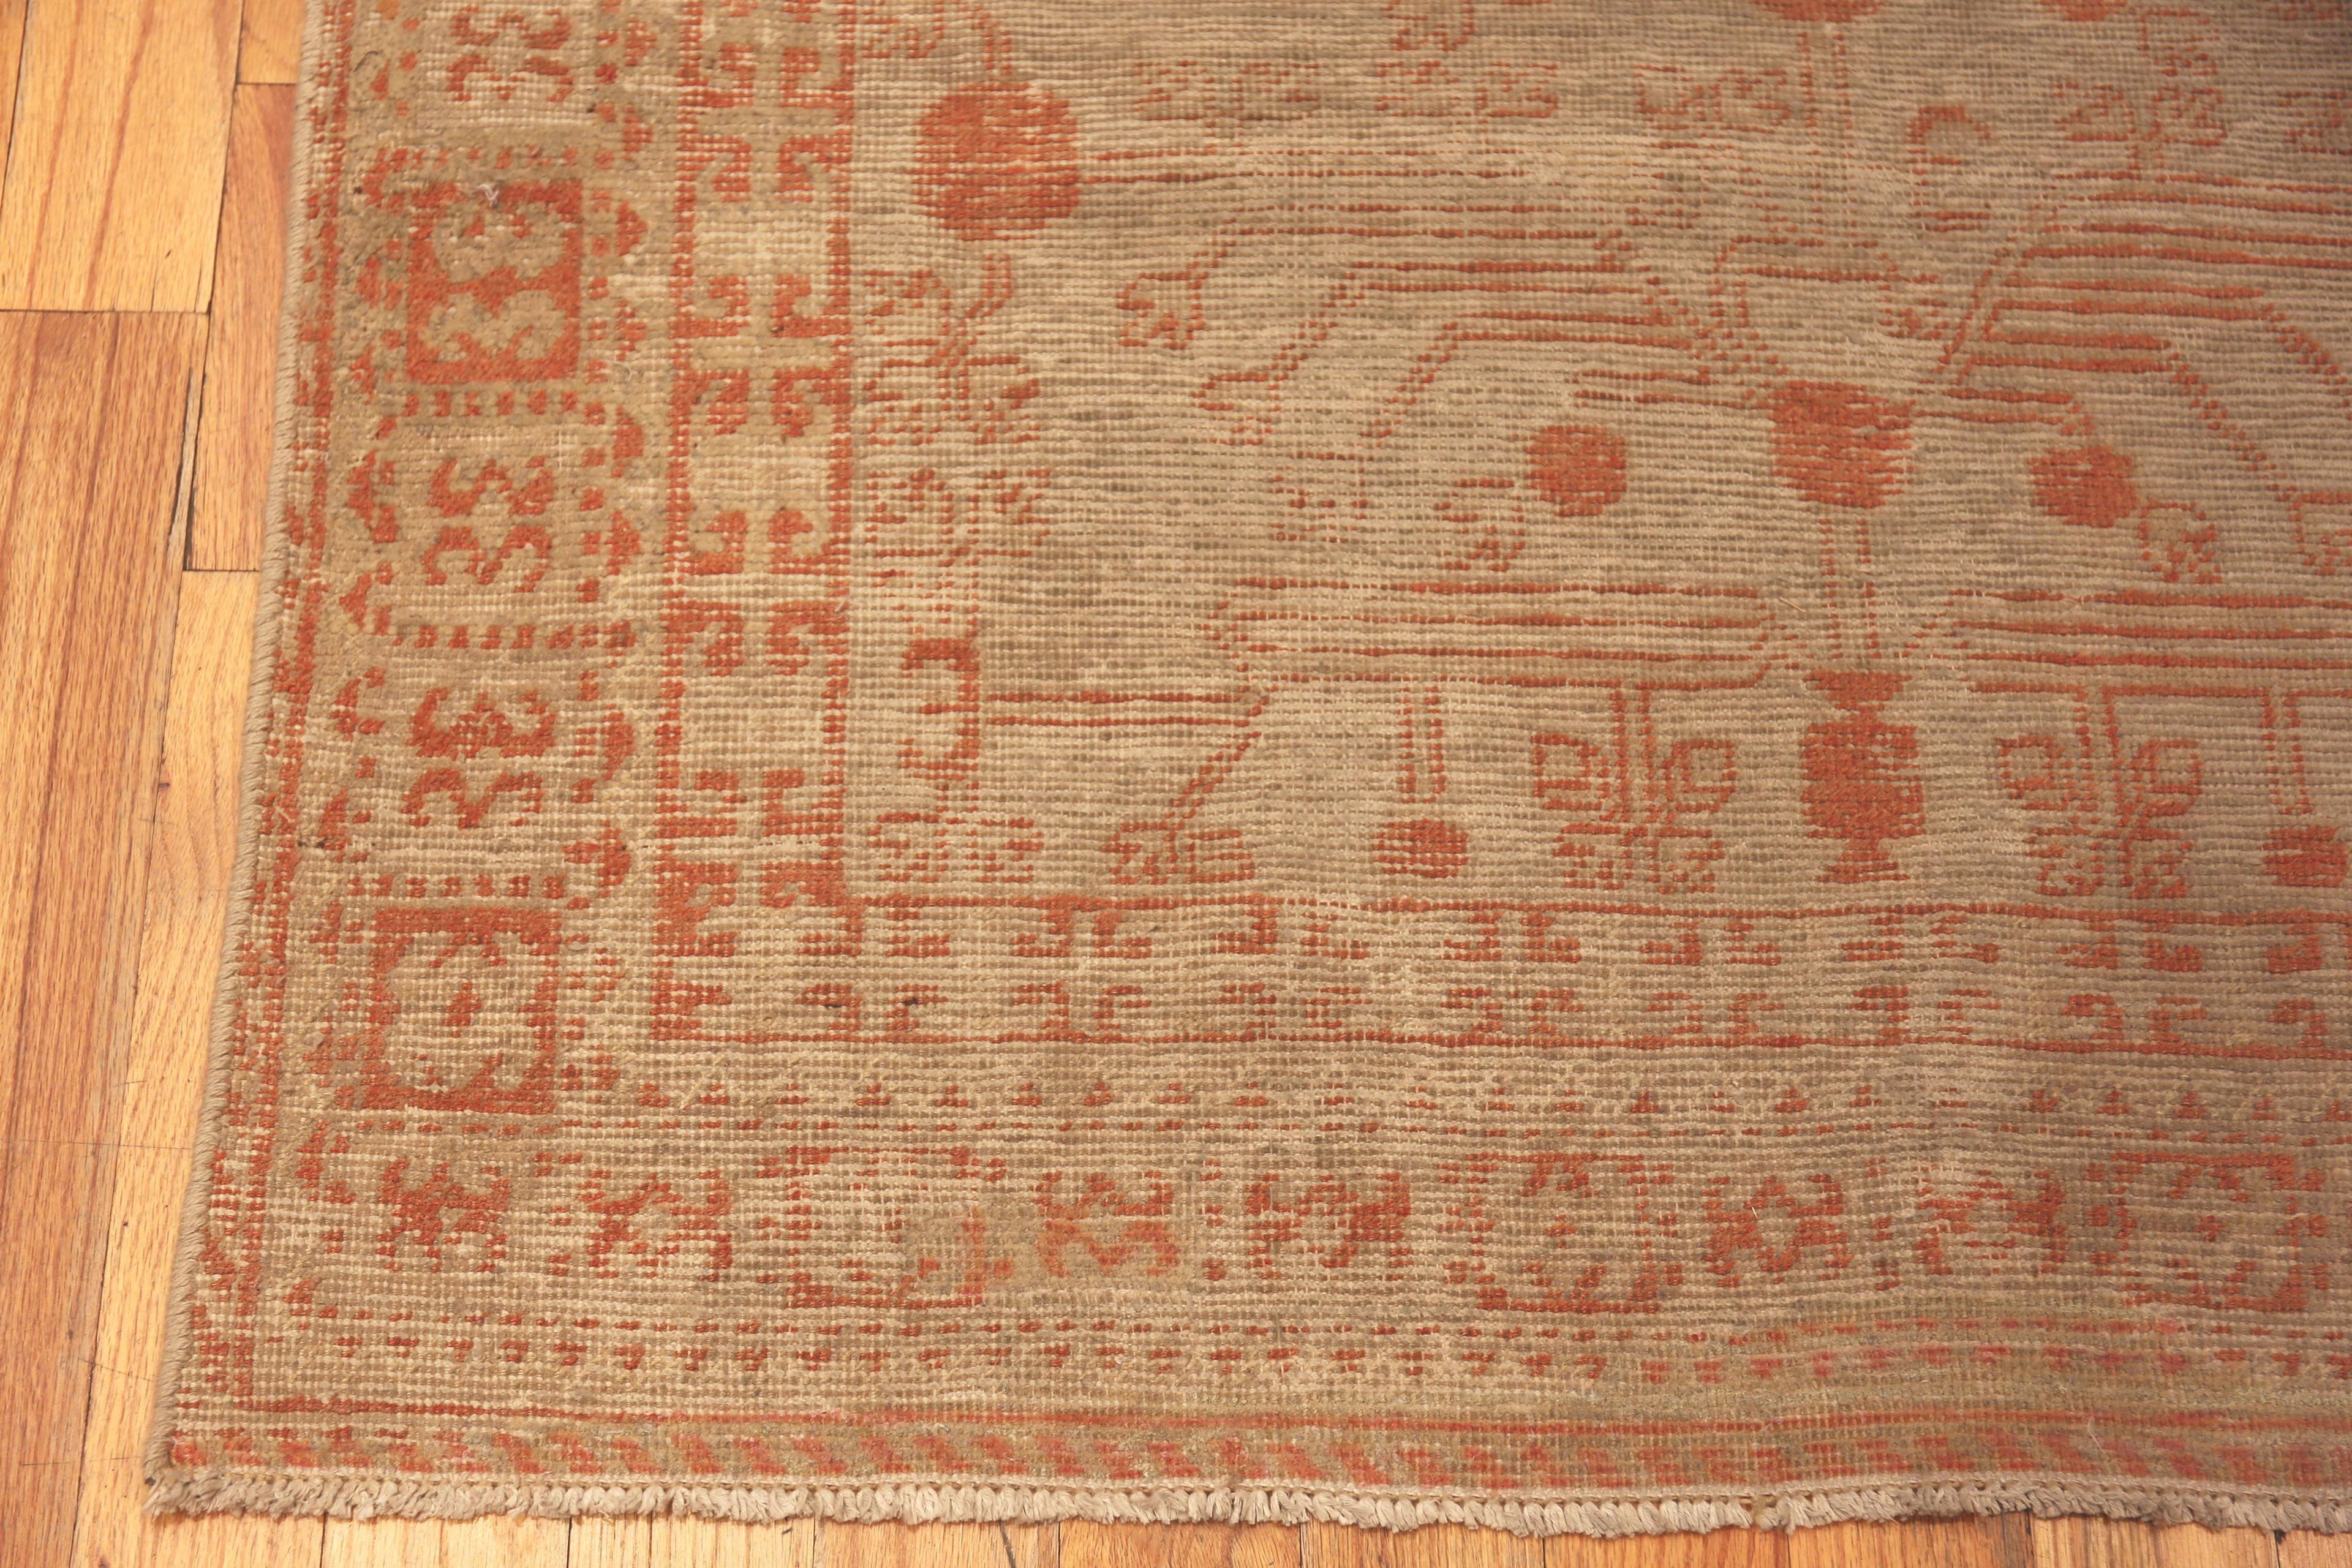 Small Antique East Turkestan Khotan Rug, Country of Origin: East Turkestan Rugs, Circa date: 1900. Size: 4 ft 1 in x 8 ft (1.24 m x 2.44 m)